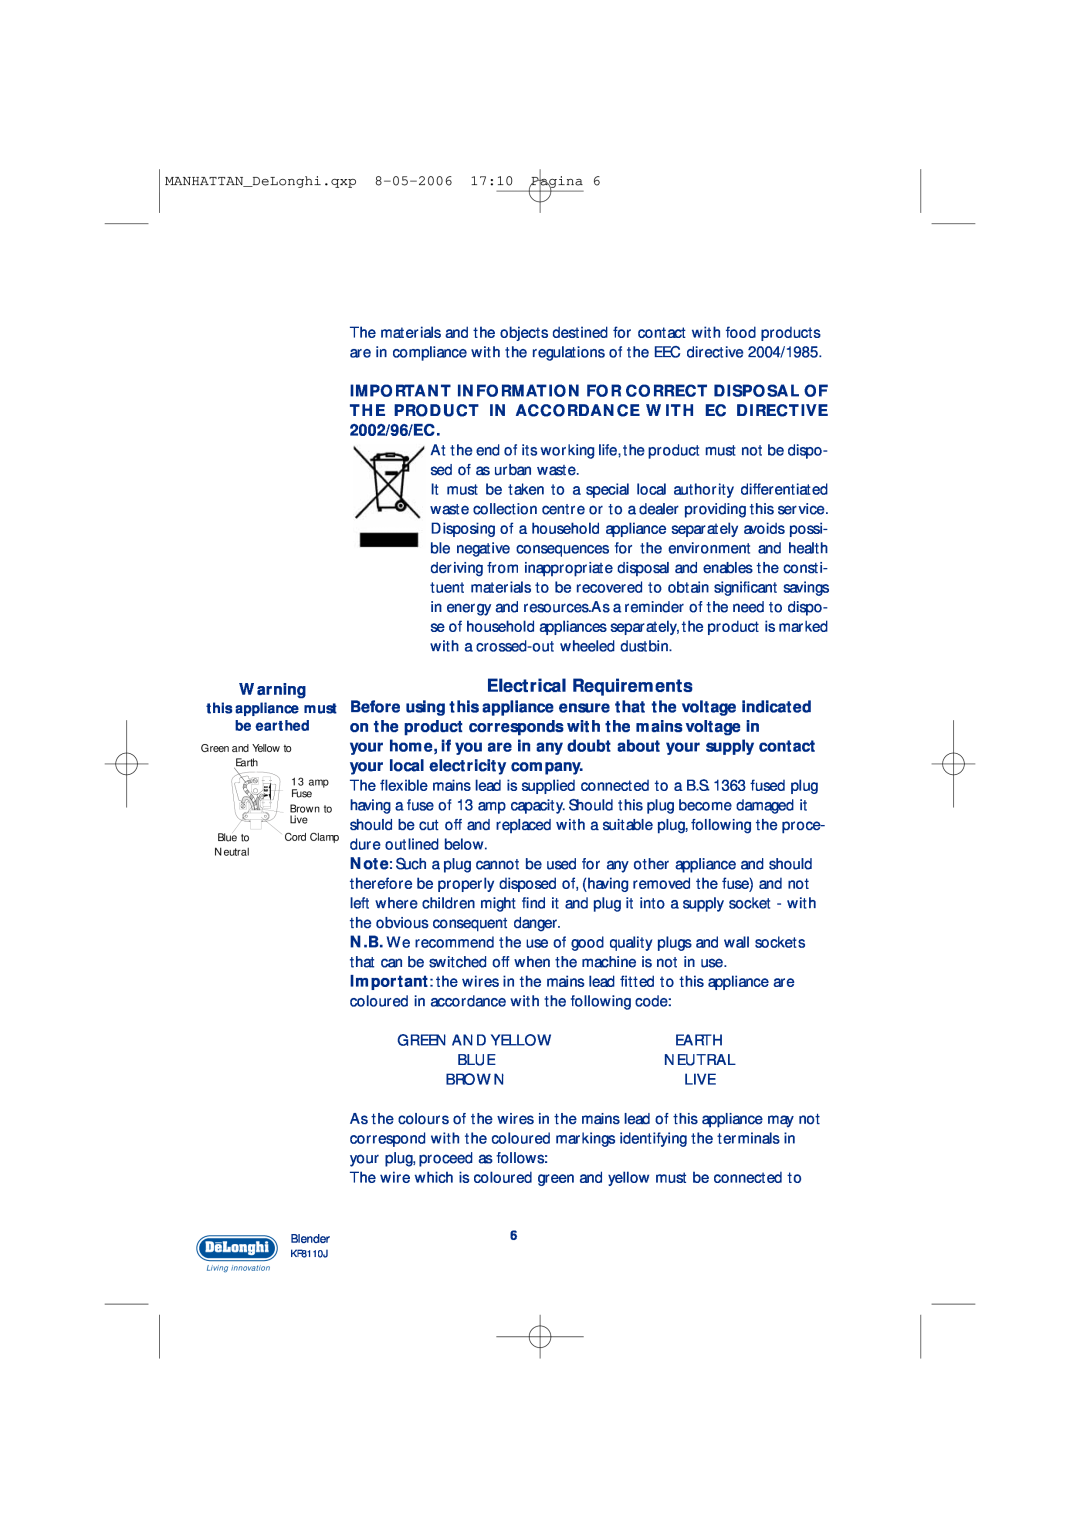 DeLonghi KF8110J manual Electrical Requirements 